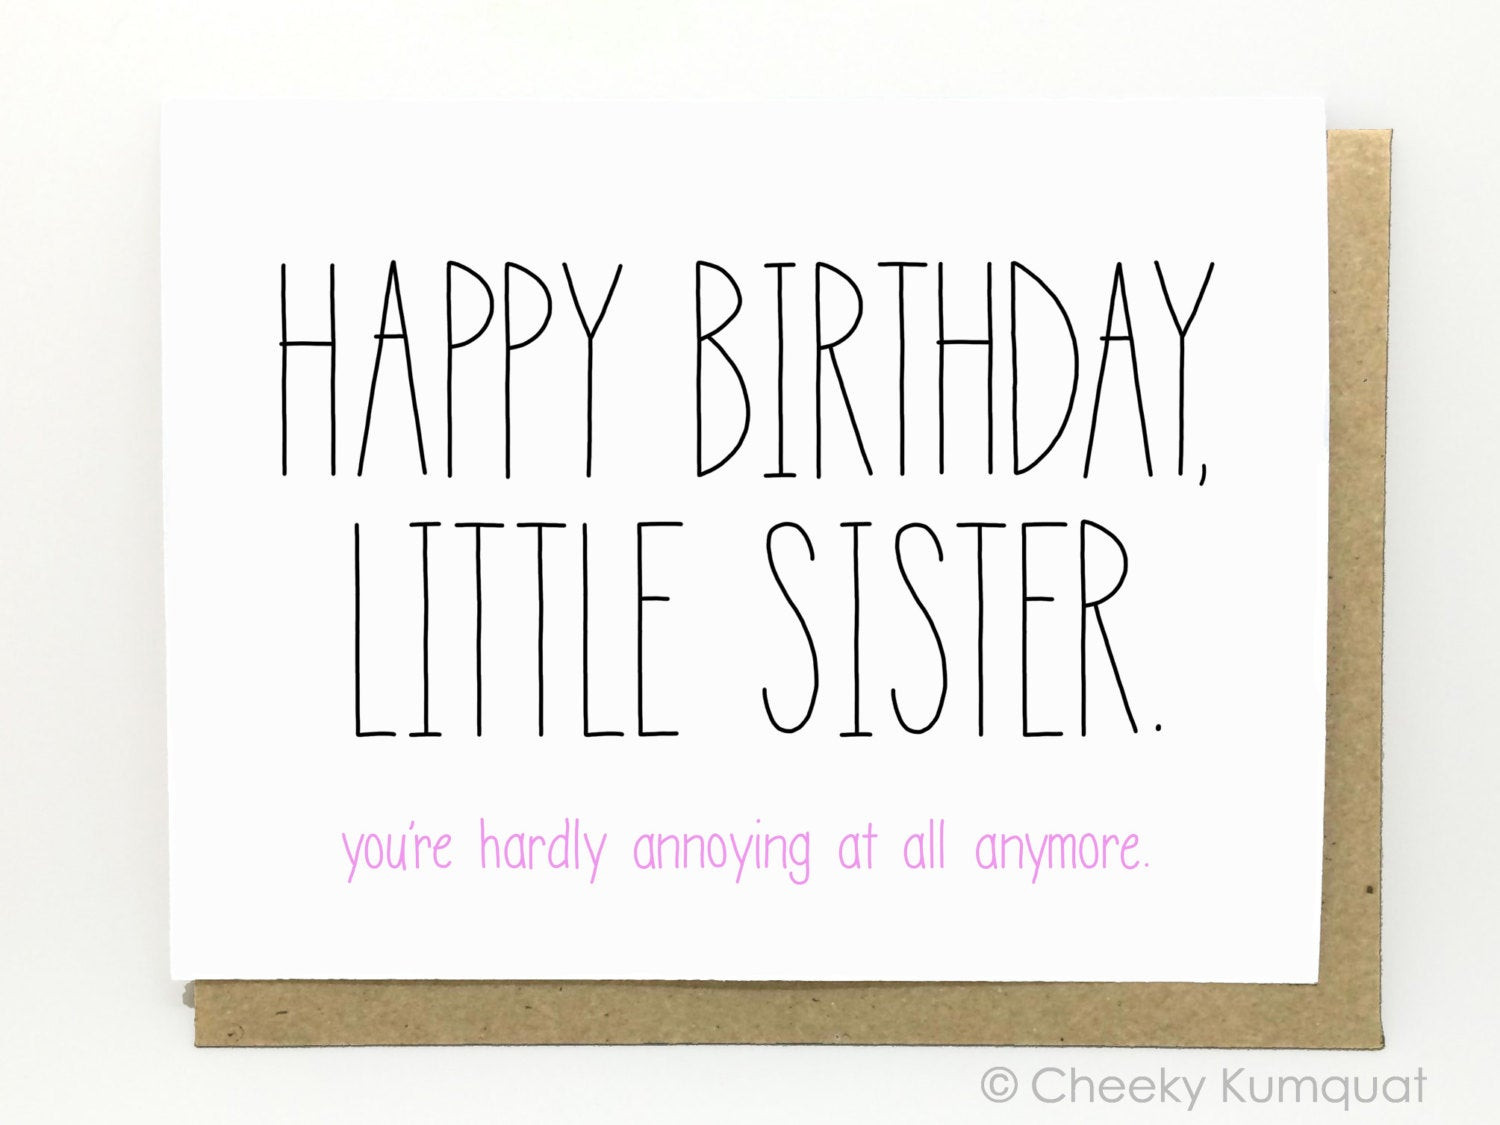 Best ideas about Happy Birthday Funny Sister
. Save or Pin Funny Birthday Card Birthday Card for Sister by CheekyKumquat Now.